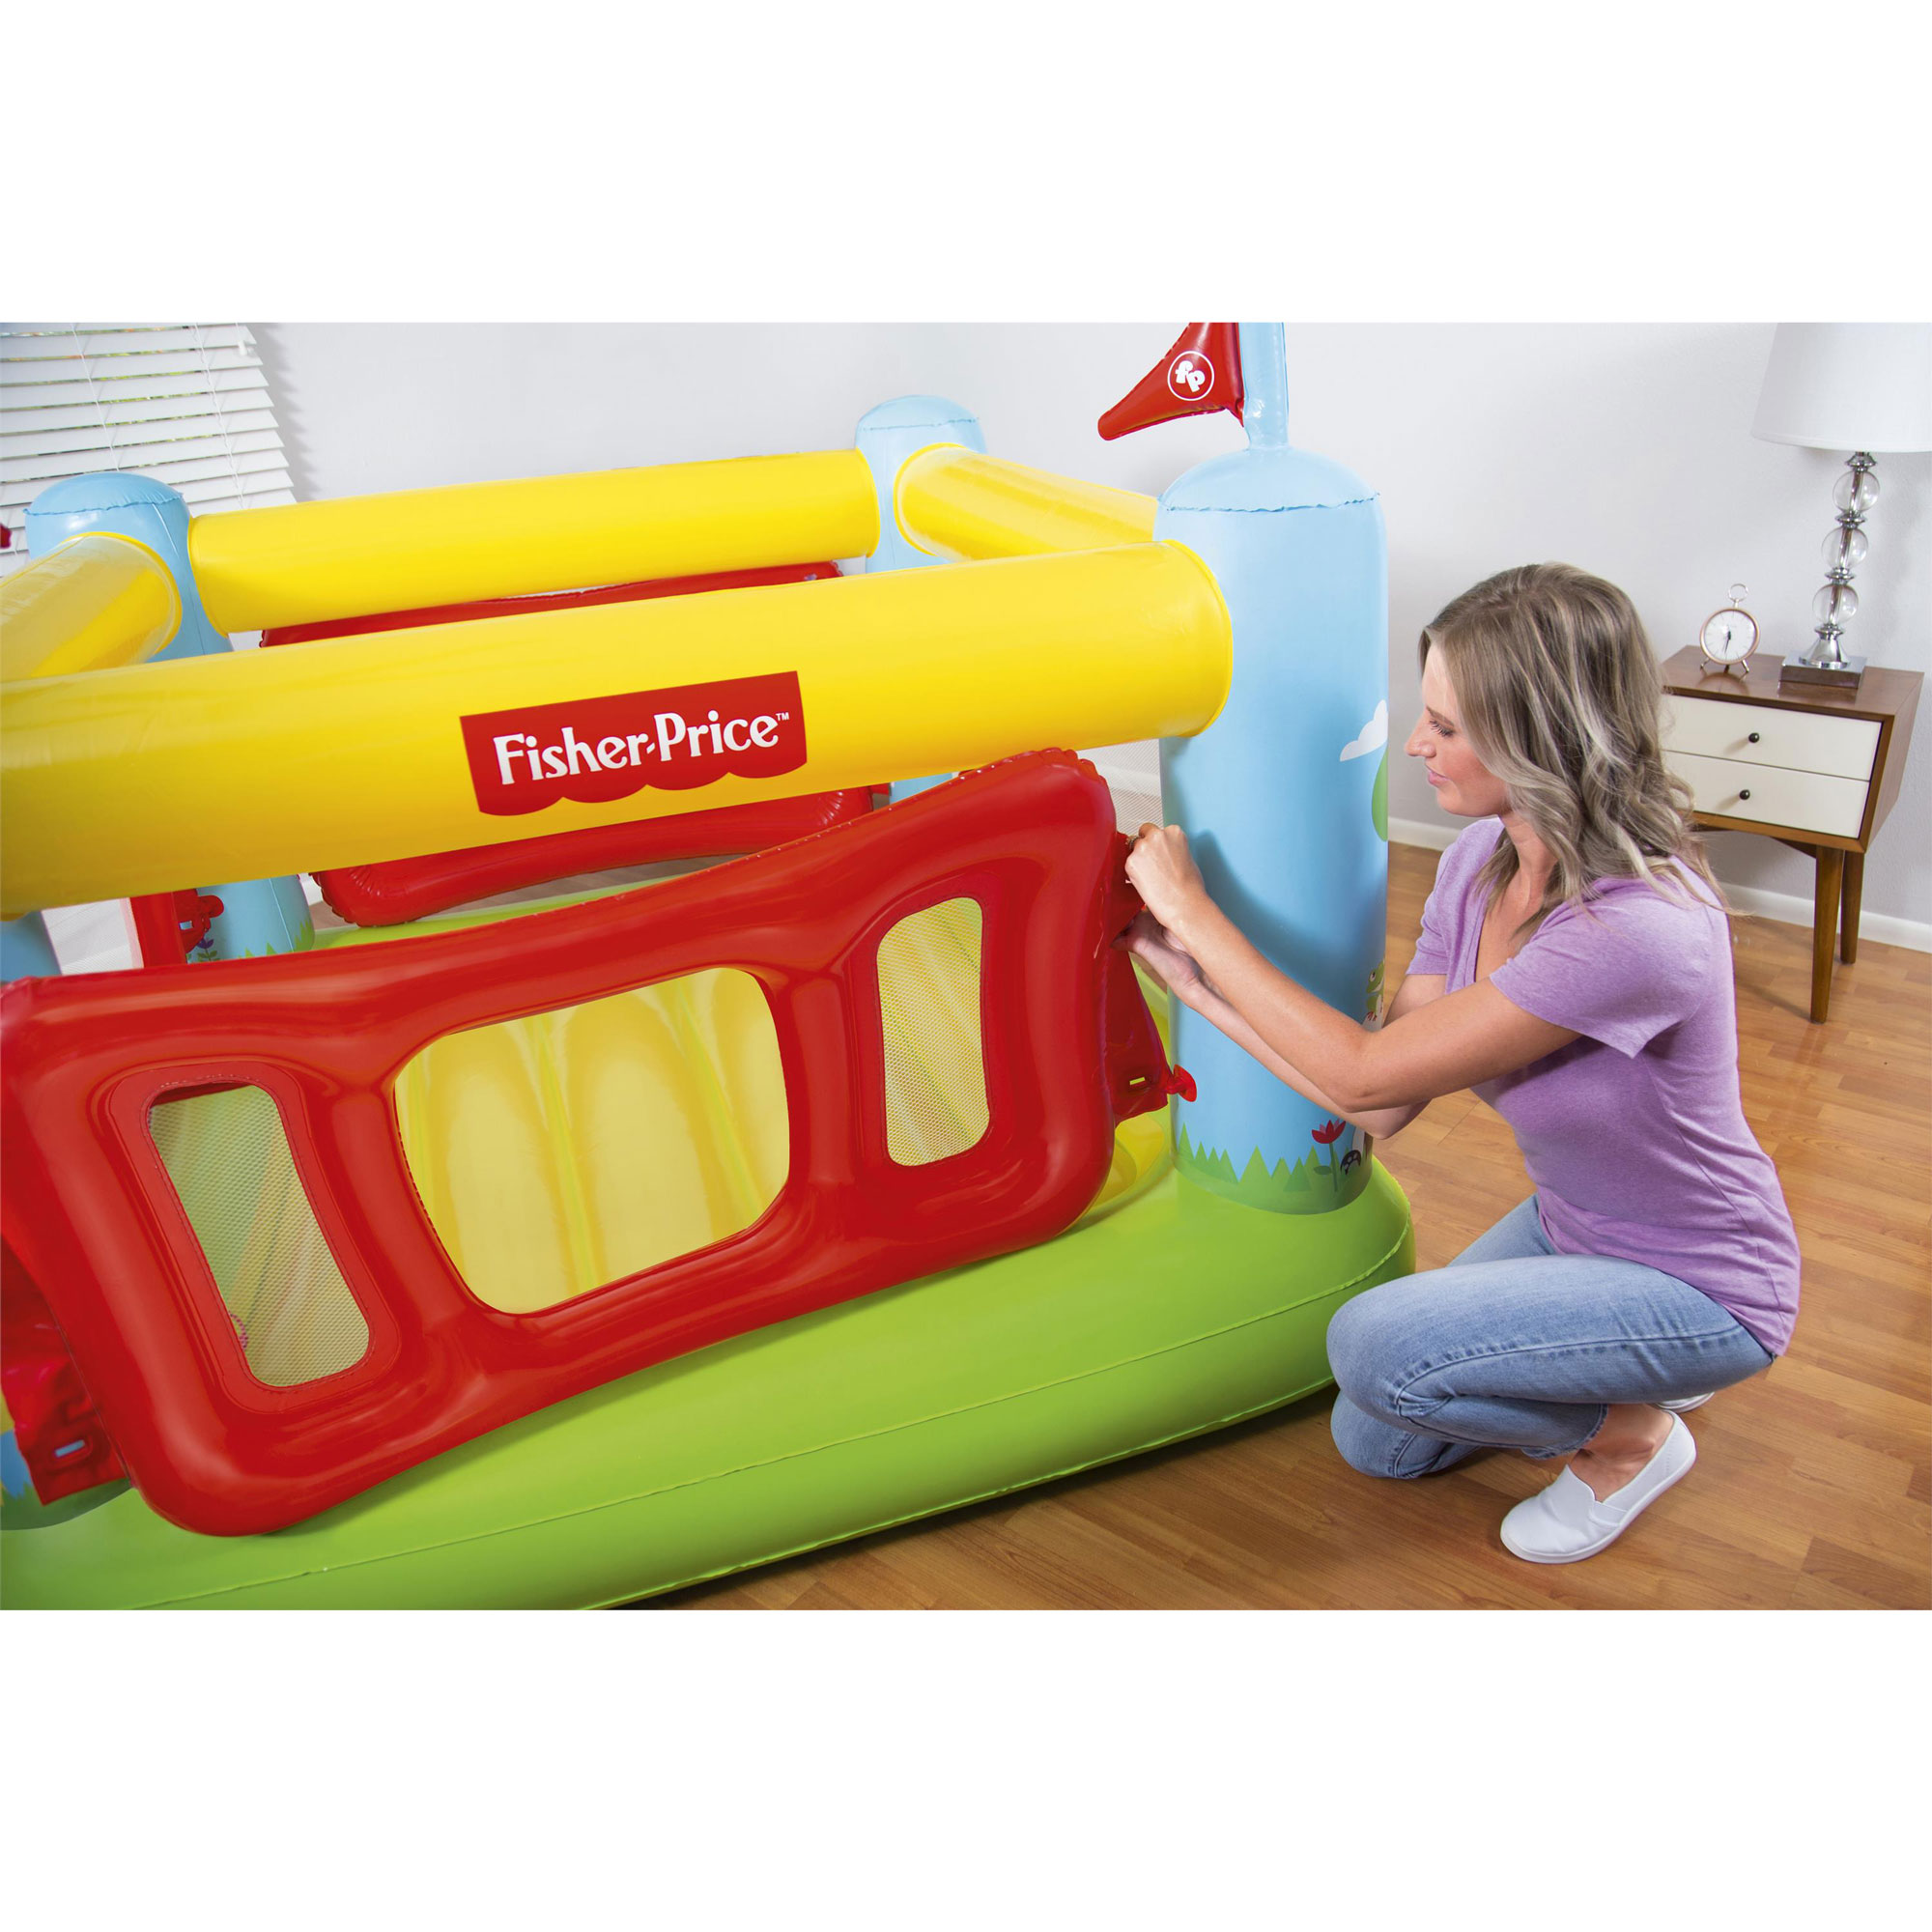 FisherPrice Kids Bouncetastic Bouncer Inflatable Bounce